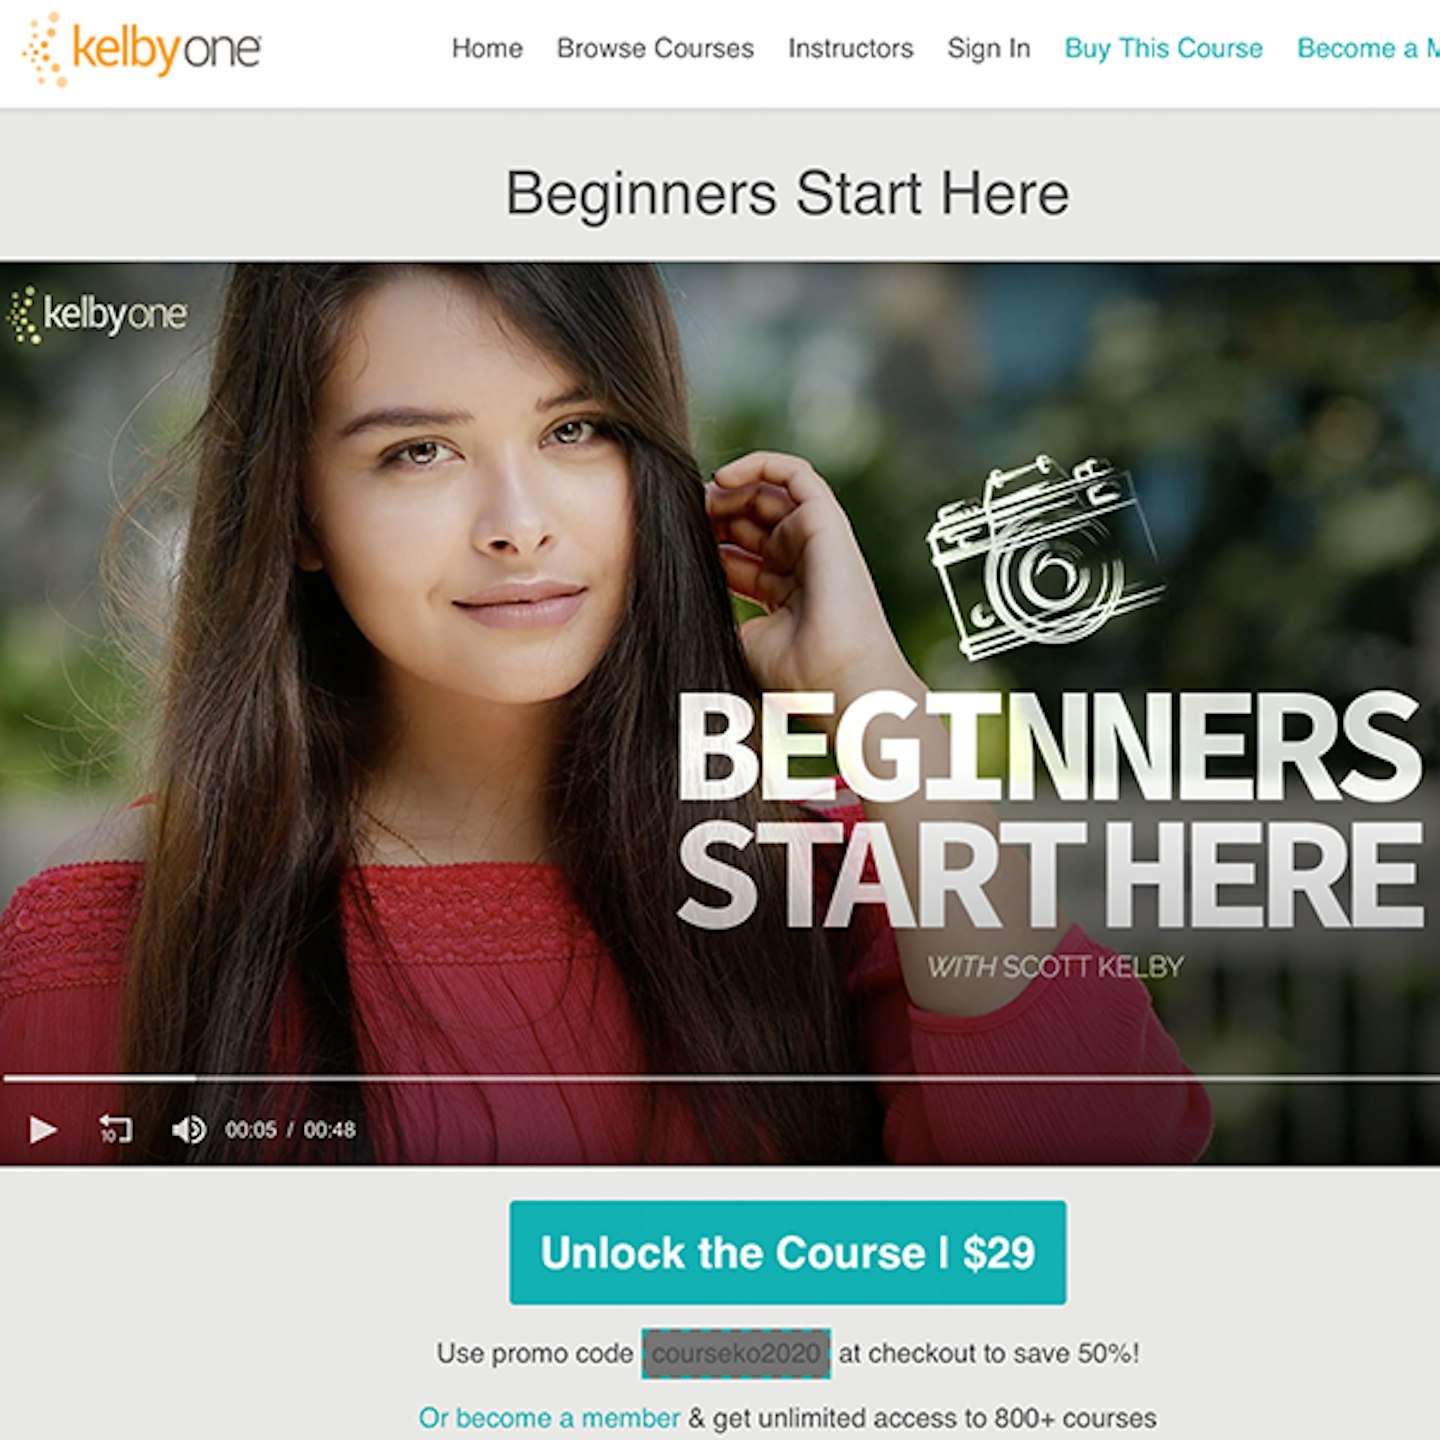 Kelbyone - Beginners Start Here